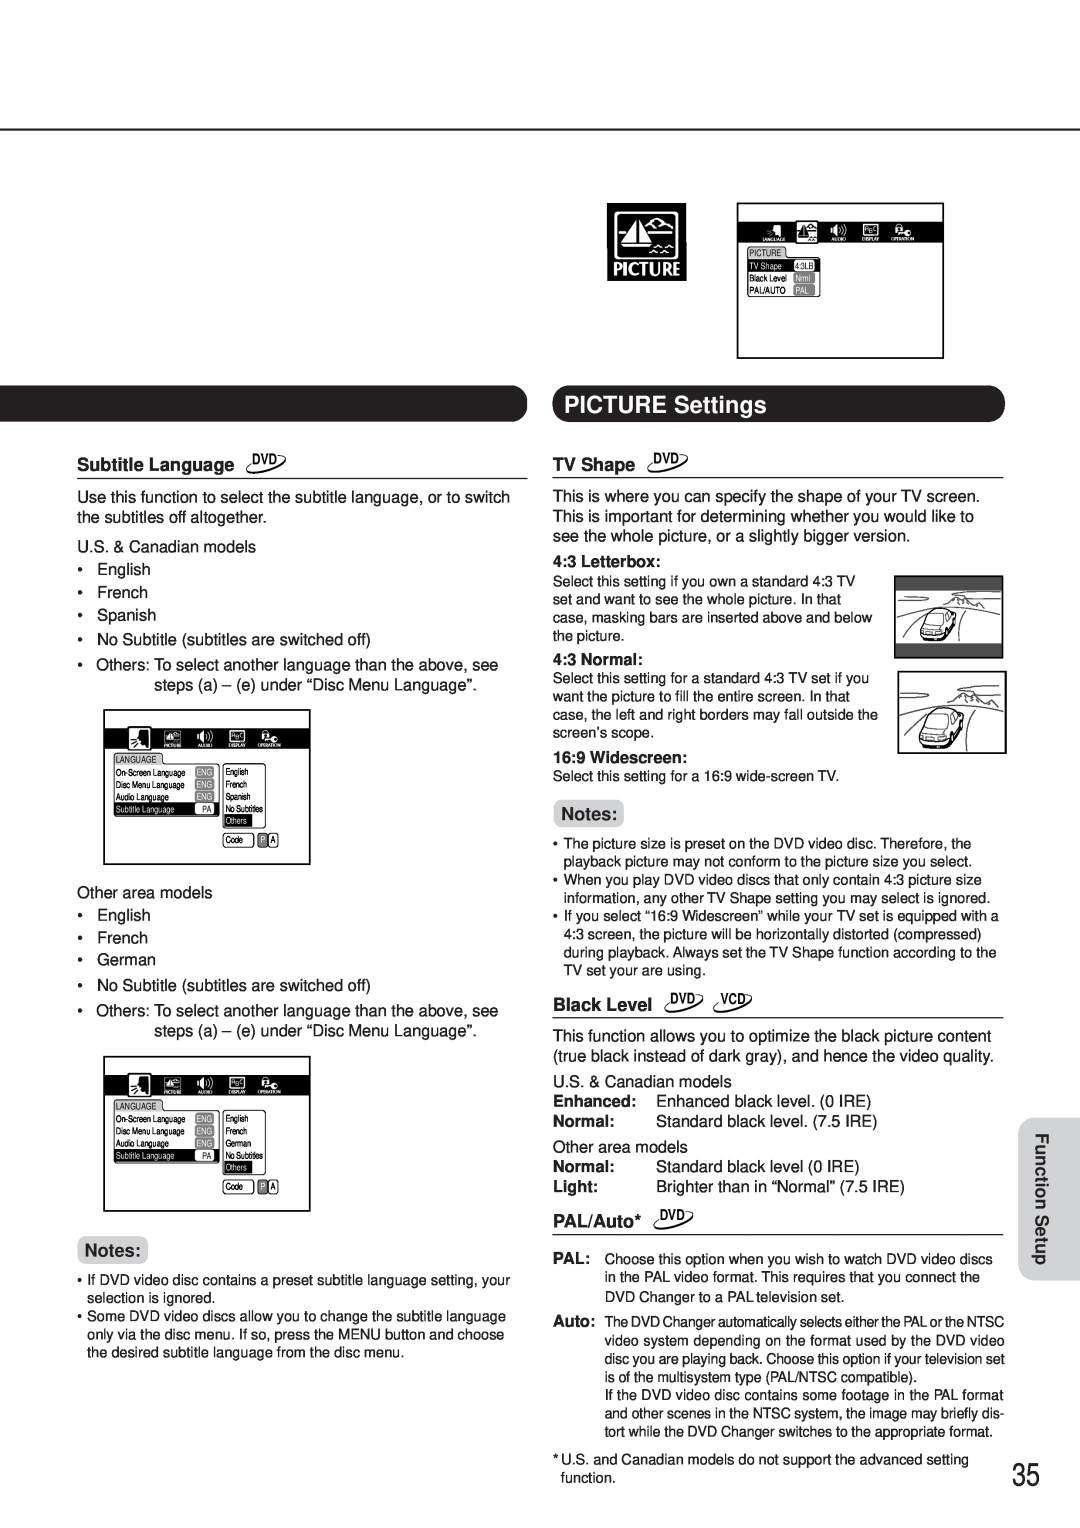 Onkyo DV-C501 instruction manual Subtitle Language DVD, TV Shape, Black Level, PAL/Auto, Setup 